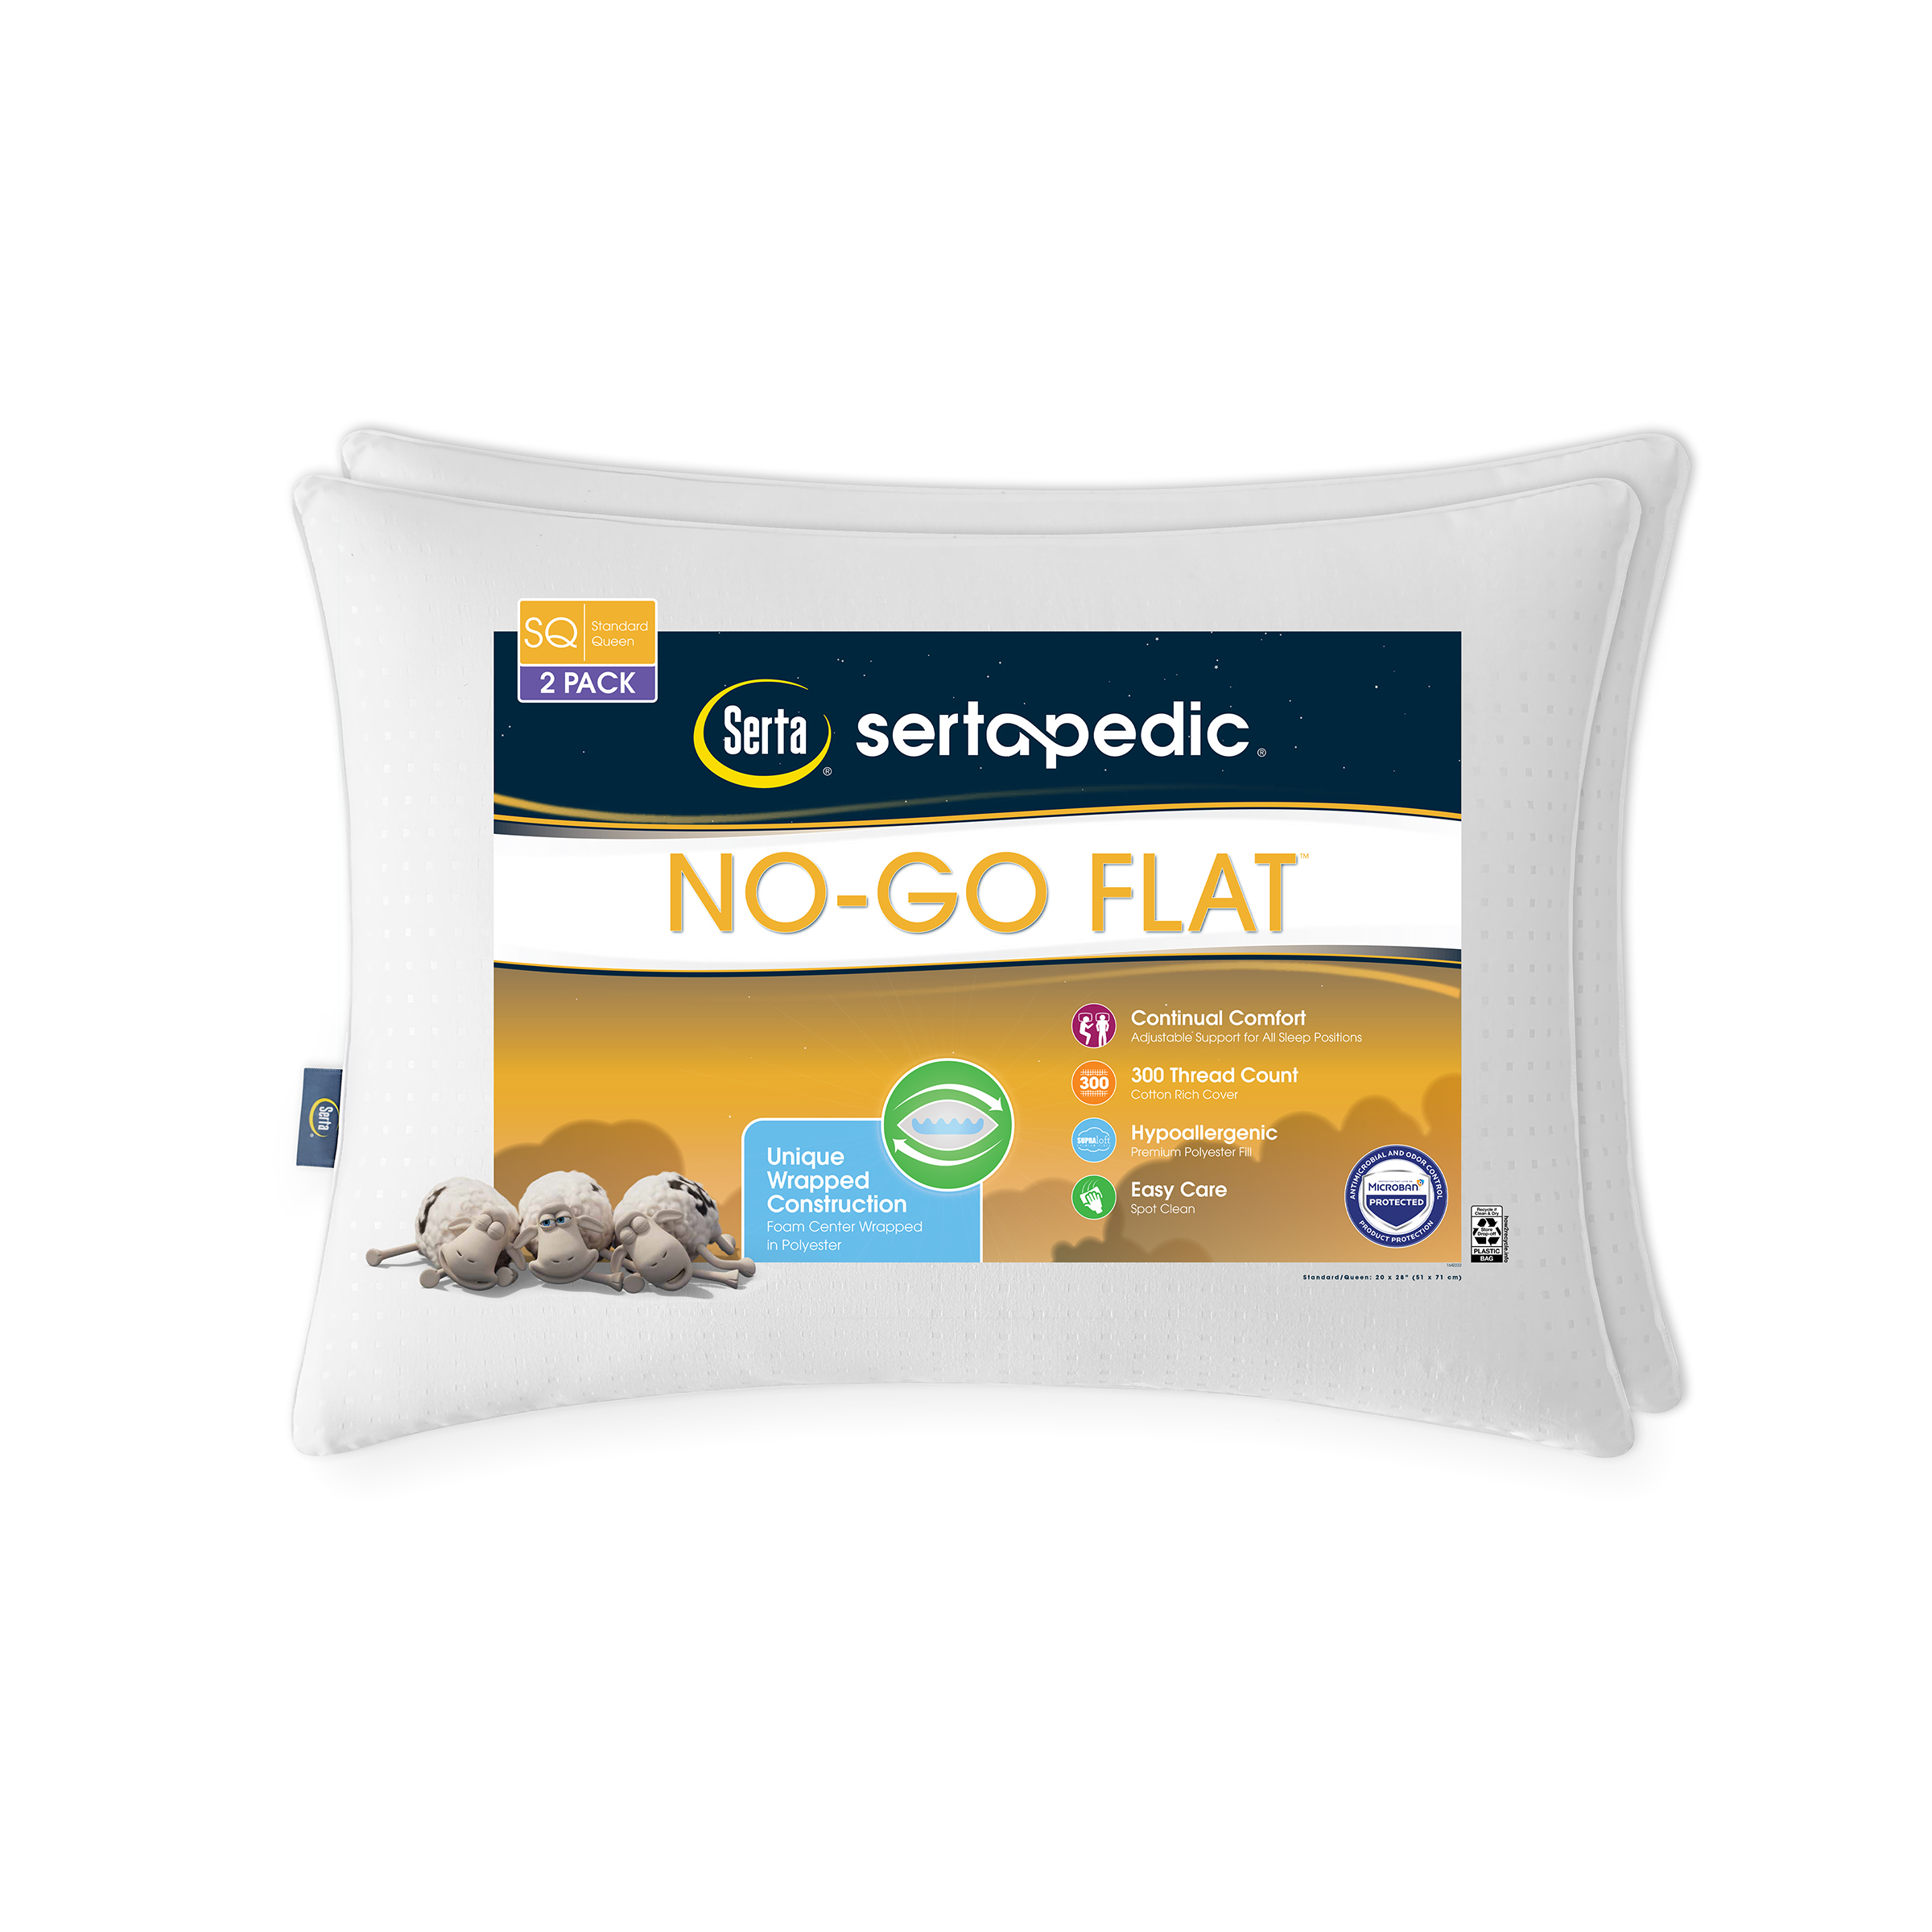 Serta Sertapedic Won't Go Flat White Pillow, 2 Count - image 1 of 5